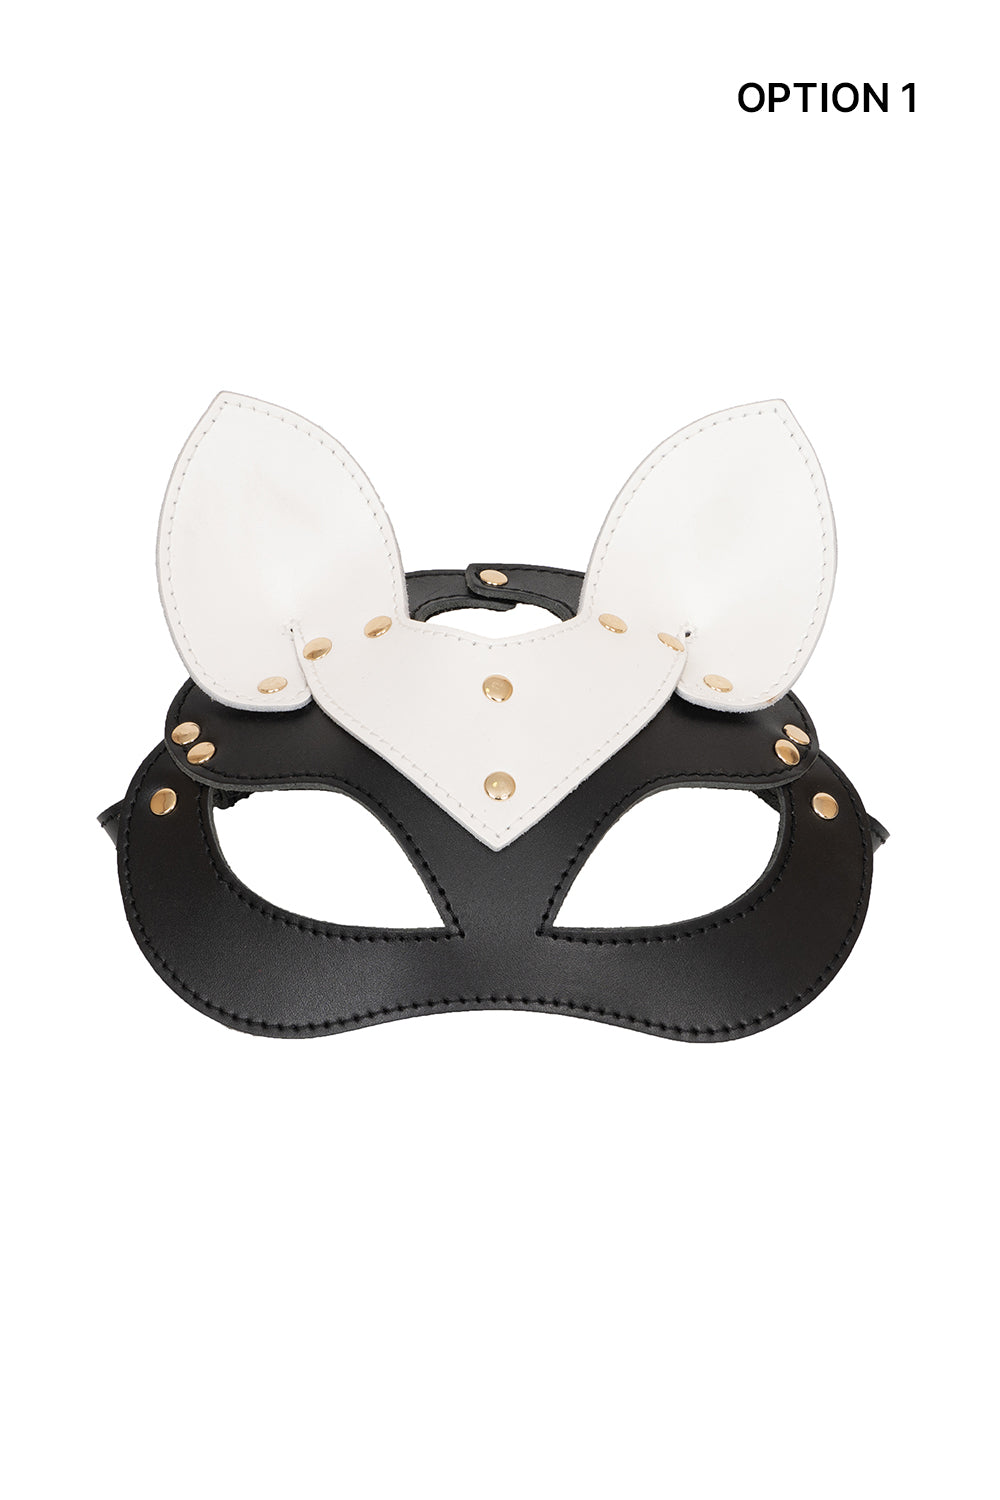 Leather сat mask, kitty fetish mask. Black and White mix